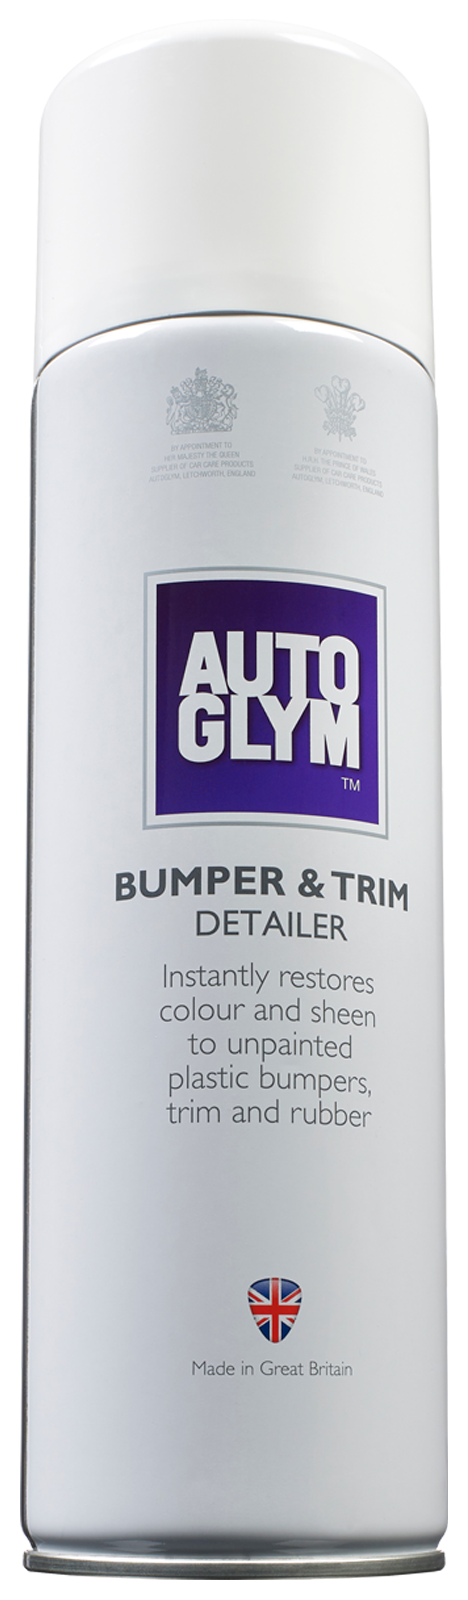 Auto Glym - Bumper & Trim Detailer, Best Quality